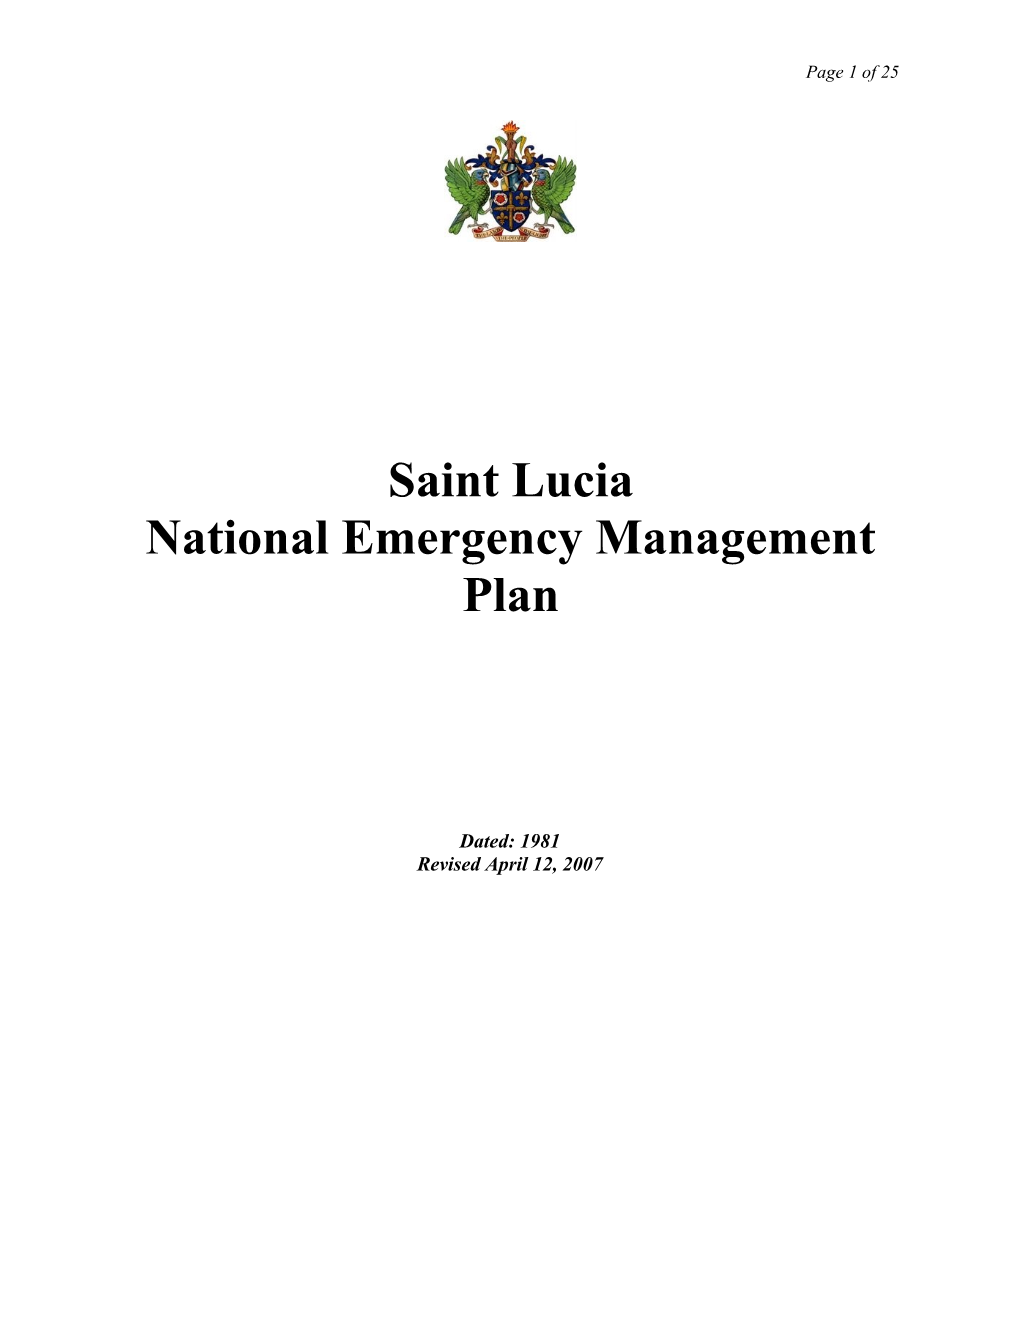 National Emergency Management Plan